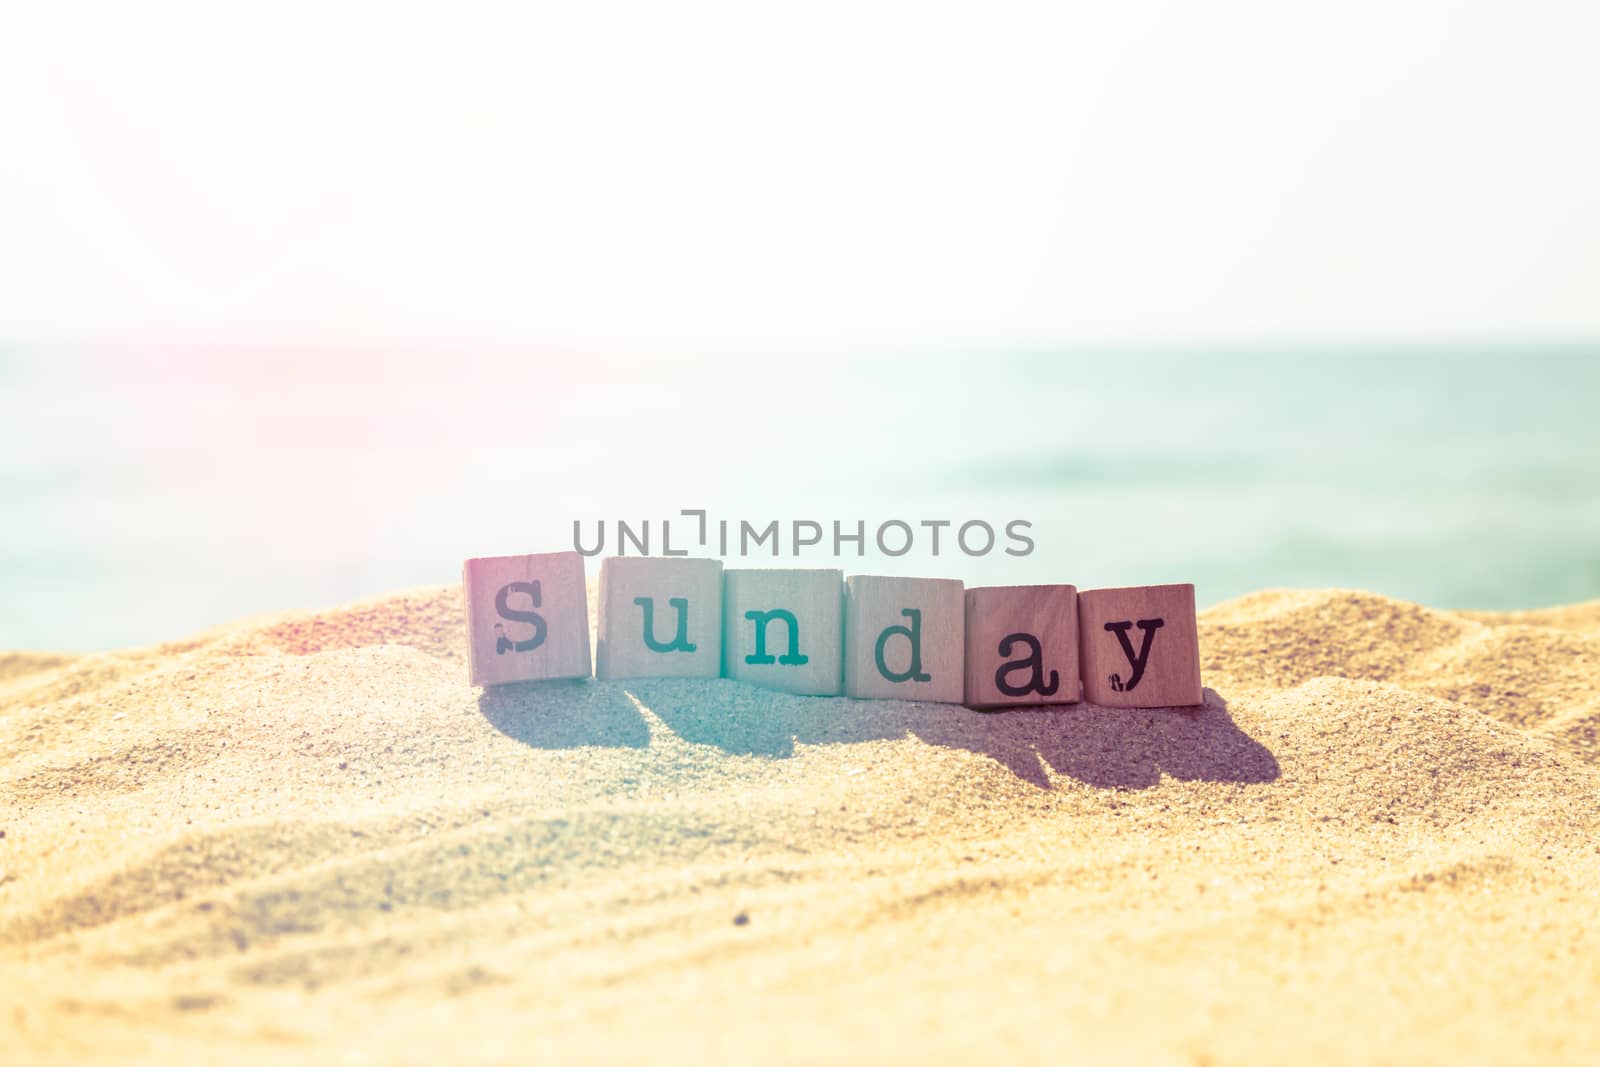 Sunday word on sea beach in retro style  by vinnstock